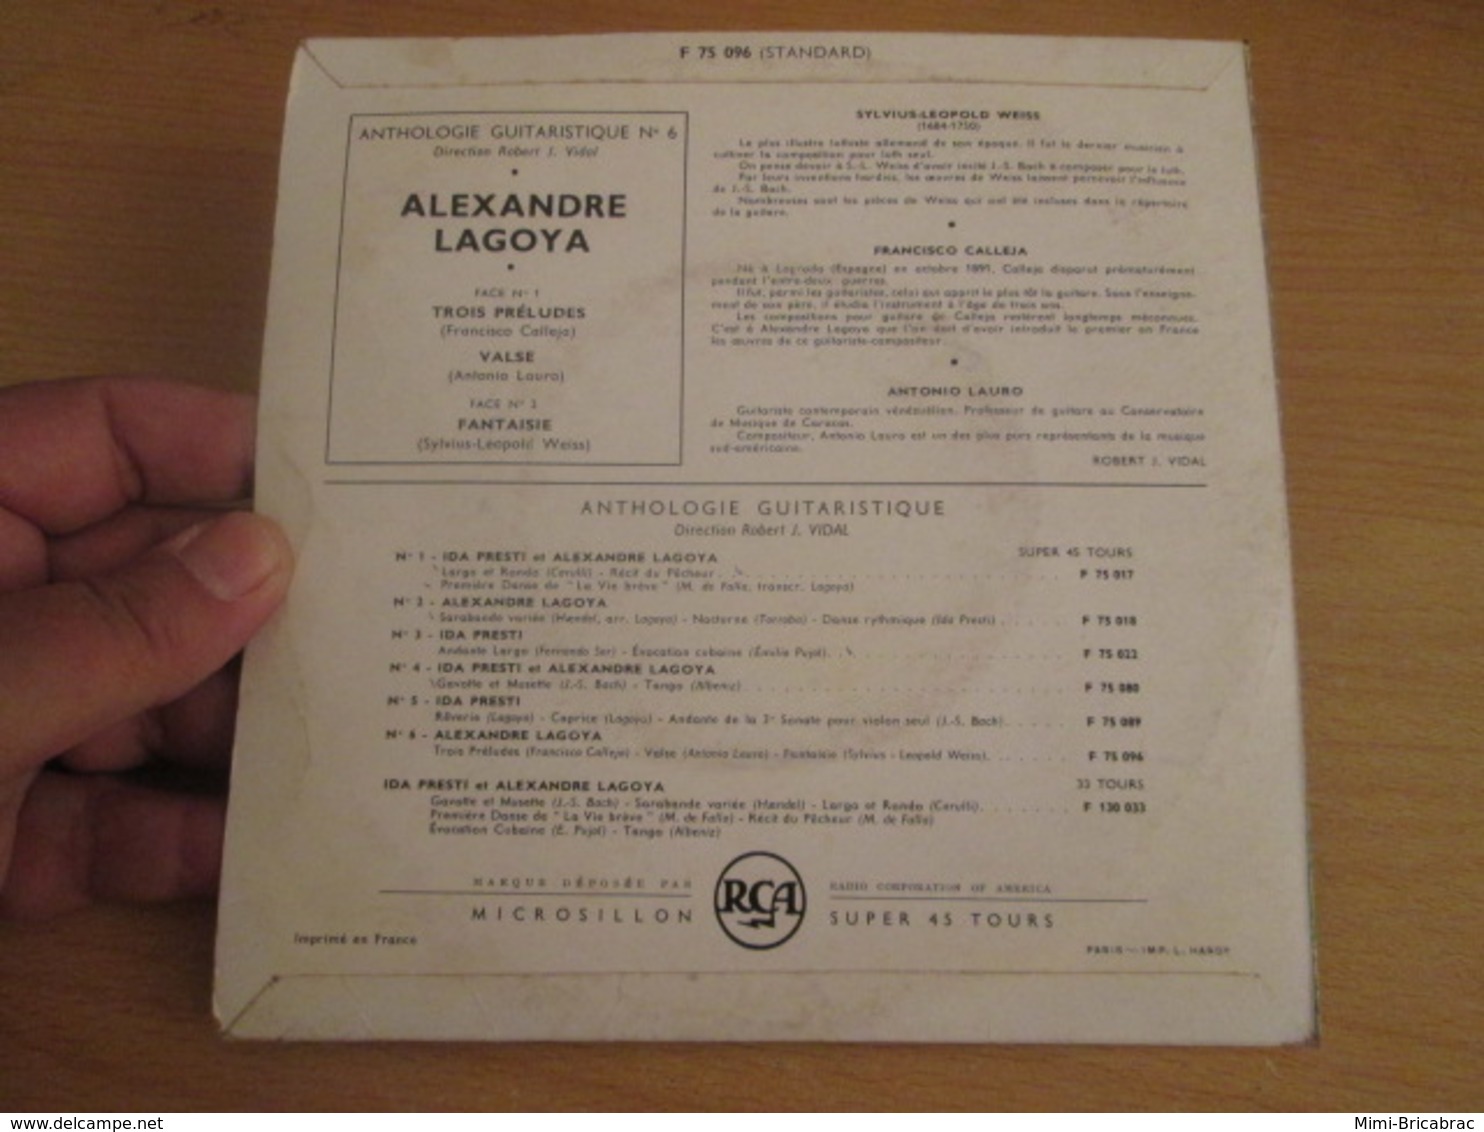 DISQUE 45T A. LAGOYA "ANTHOLOGIE GUITARISTIQUE N° 6 " 60'S EP RCA F 75096 - Instrumental